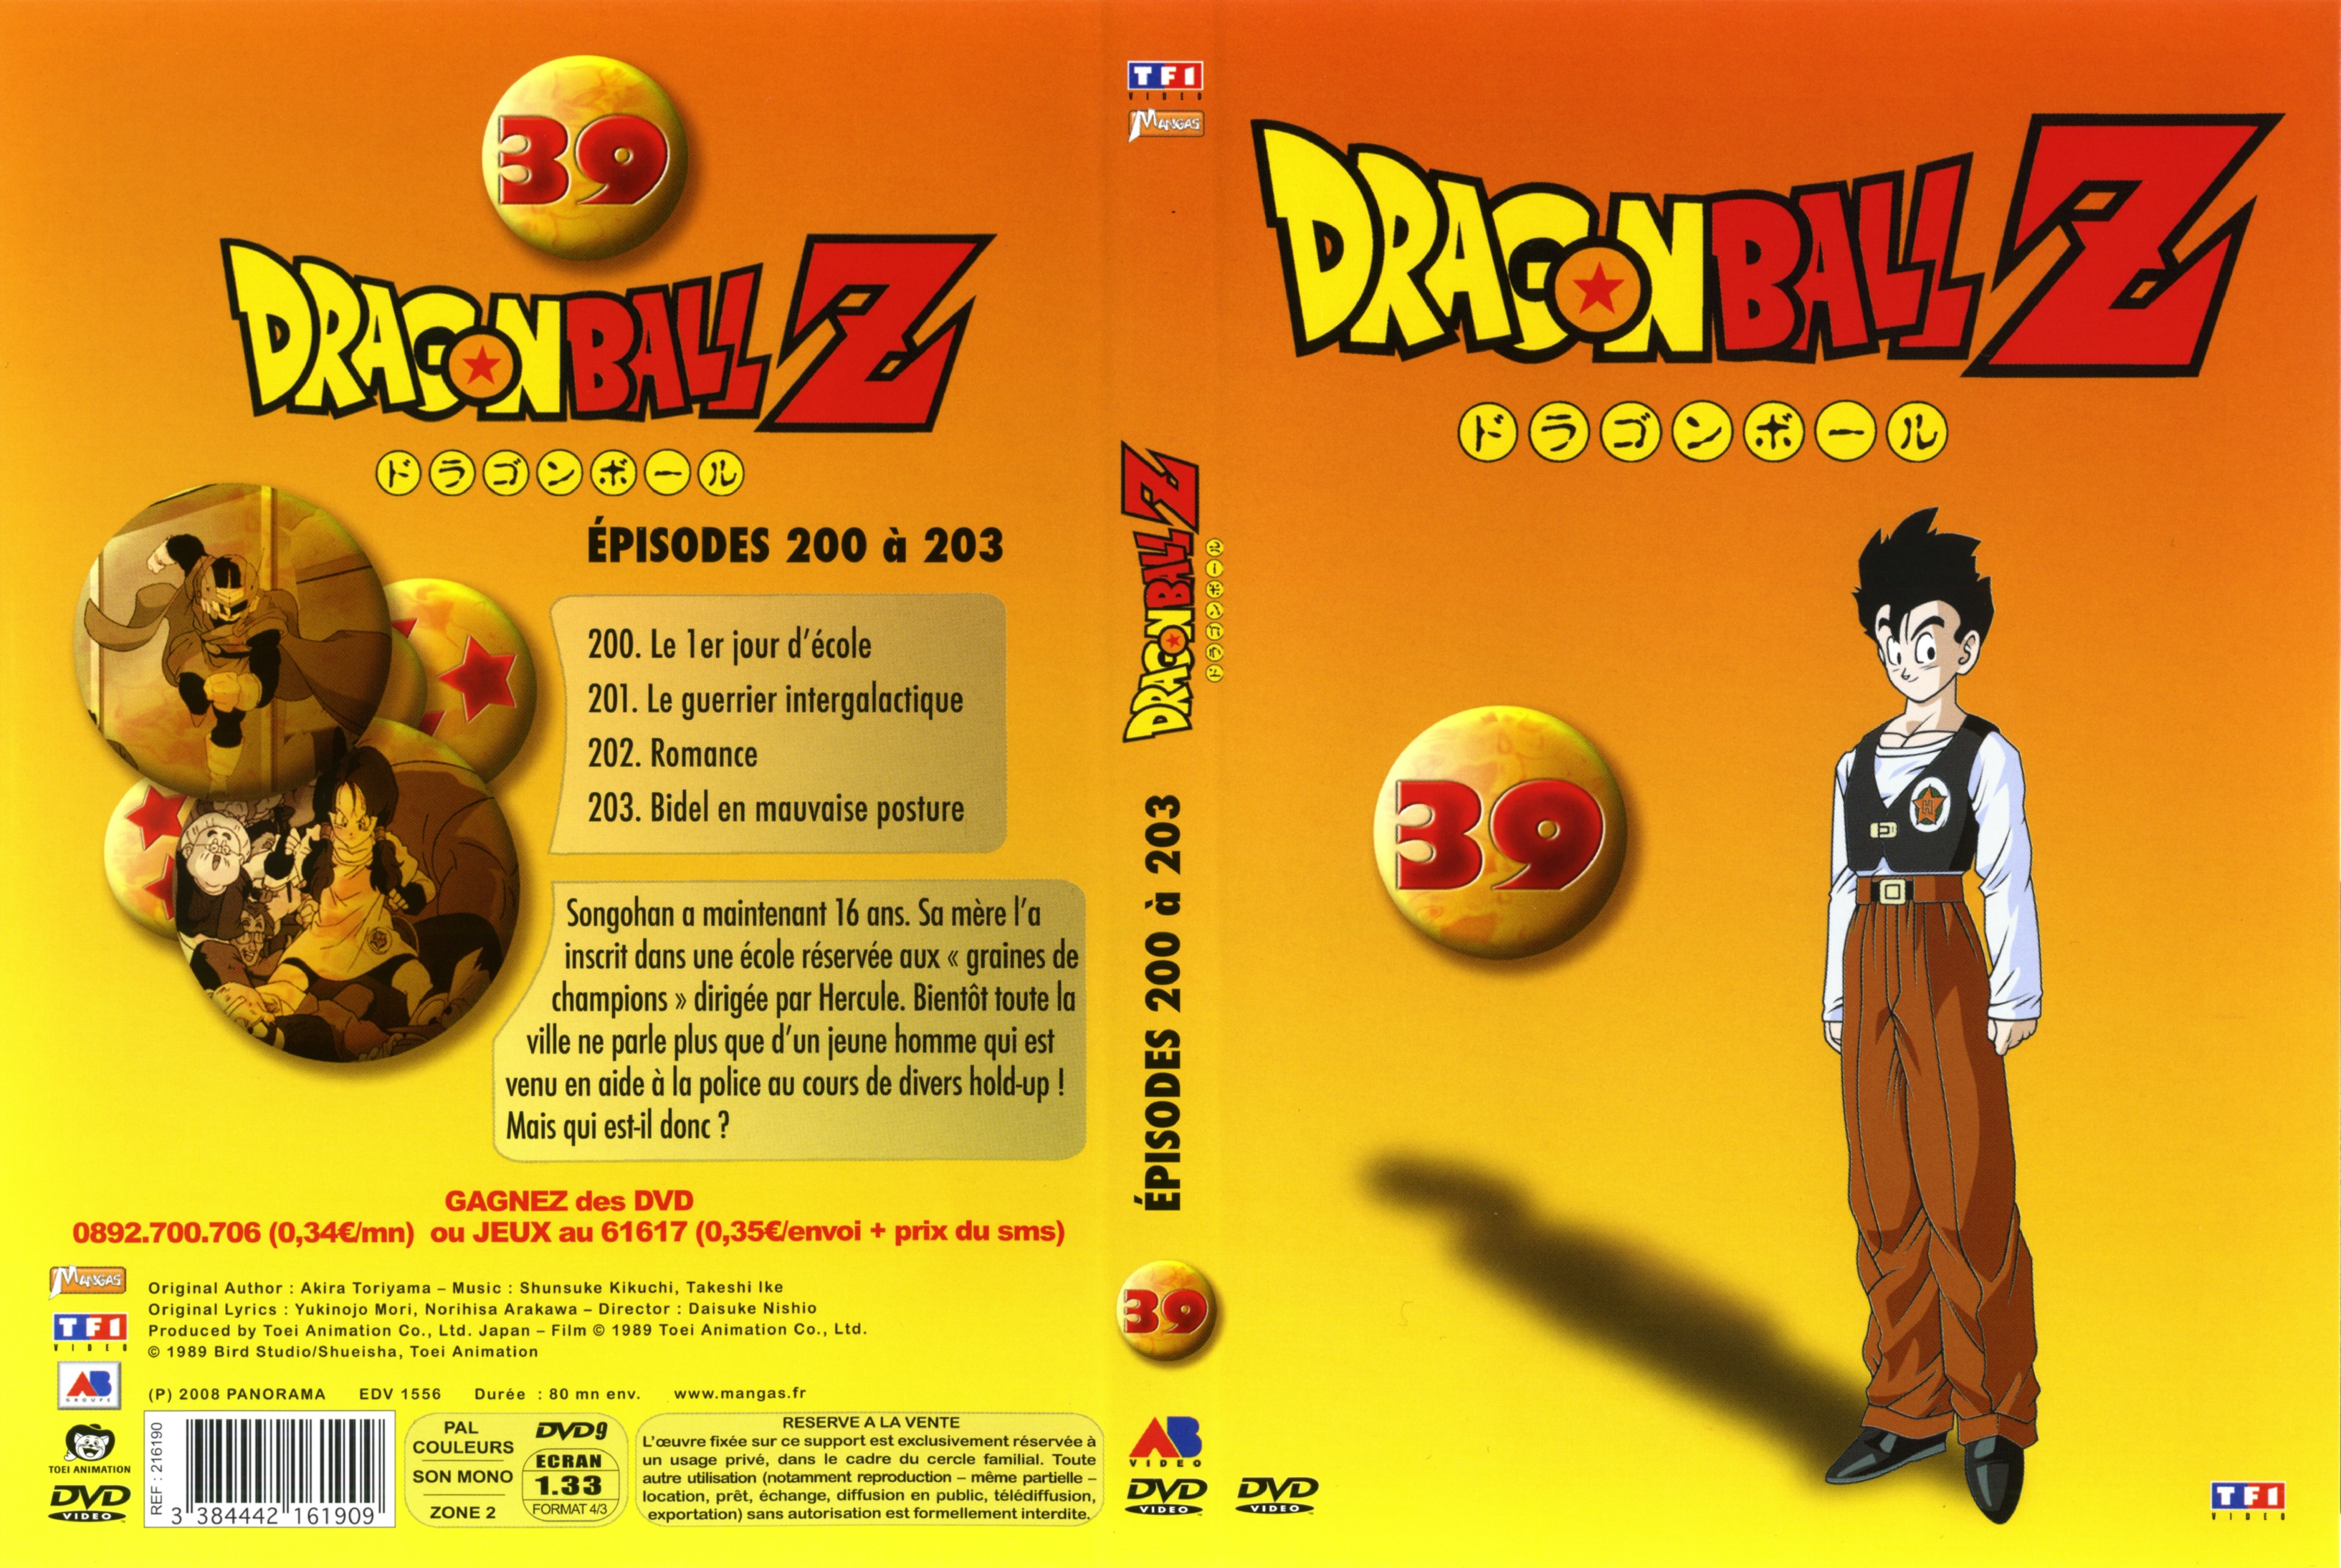 Jaquette DVD Dragon ball Z vol 39